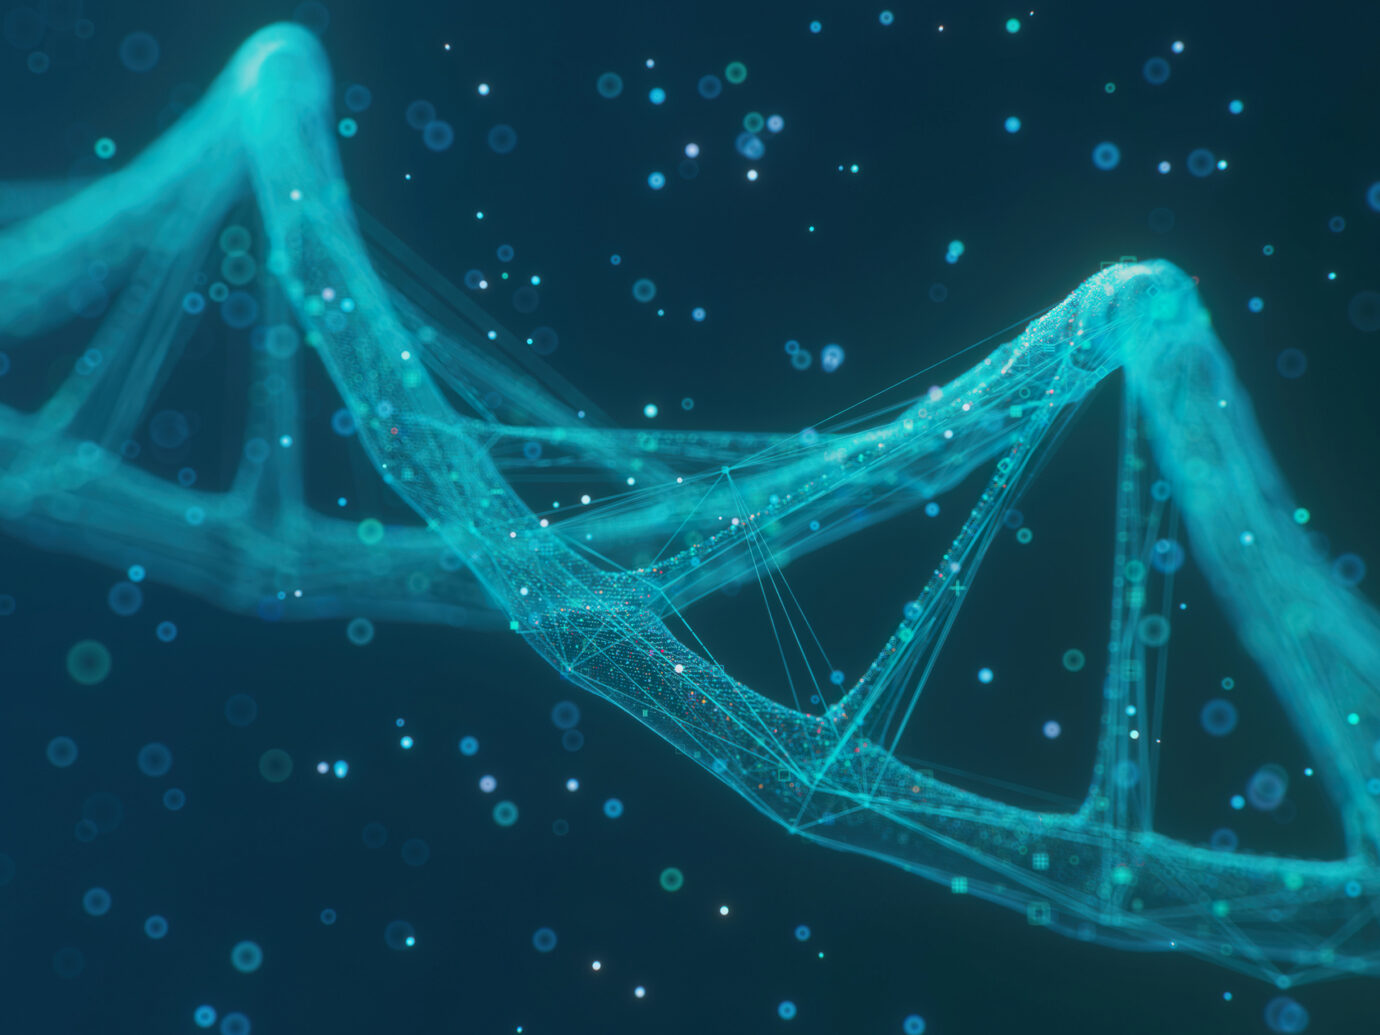 Digitally generated DNA fragment on a dark background